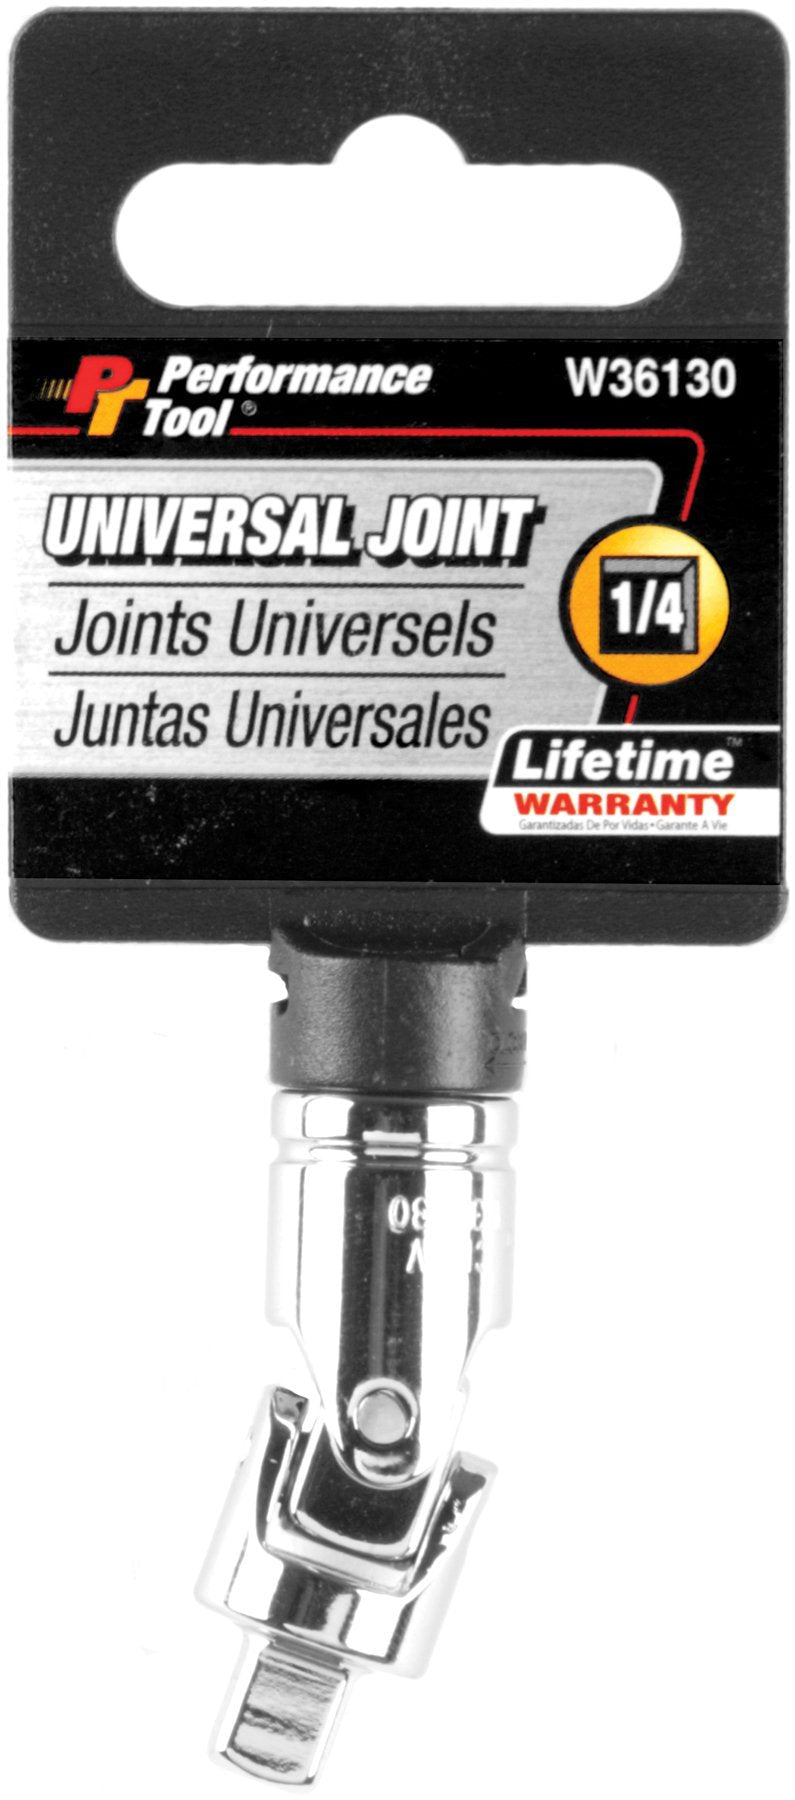  [AUSTRALIA] - Performance Tool W36130 1/4 Drive Universal Joint